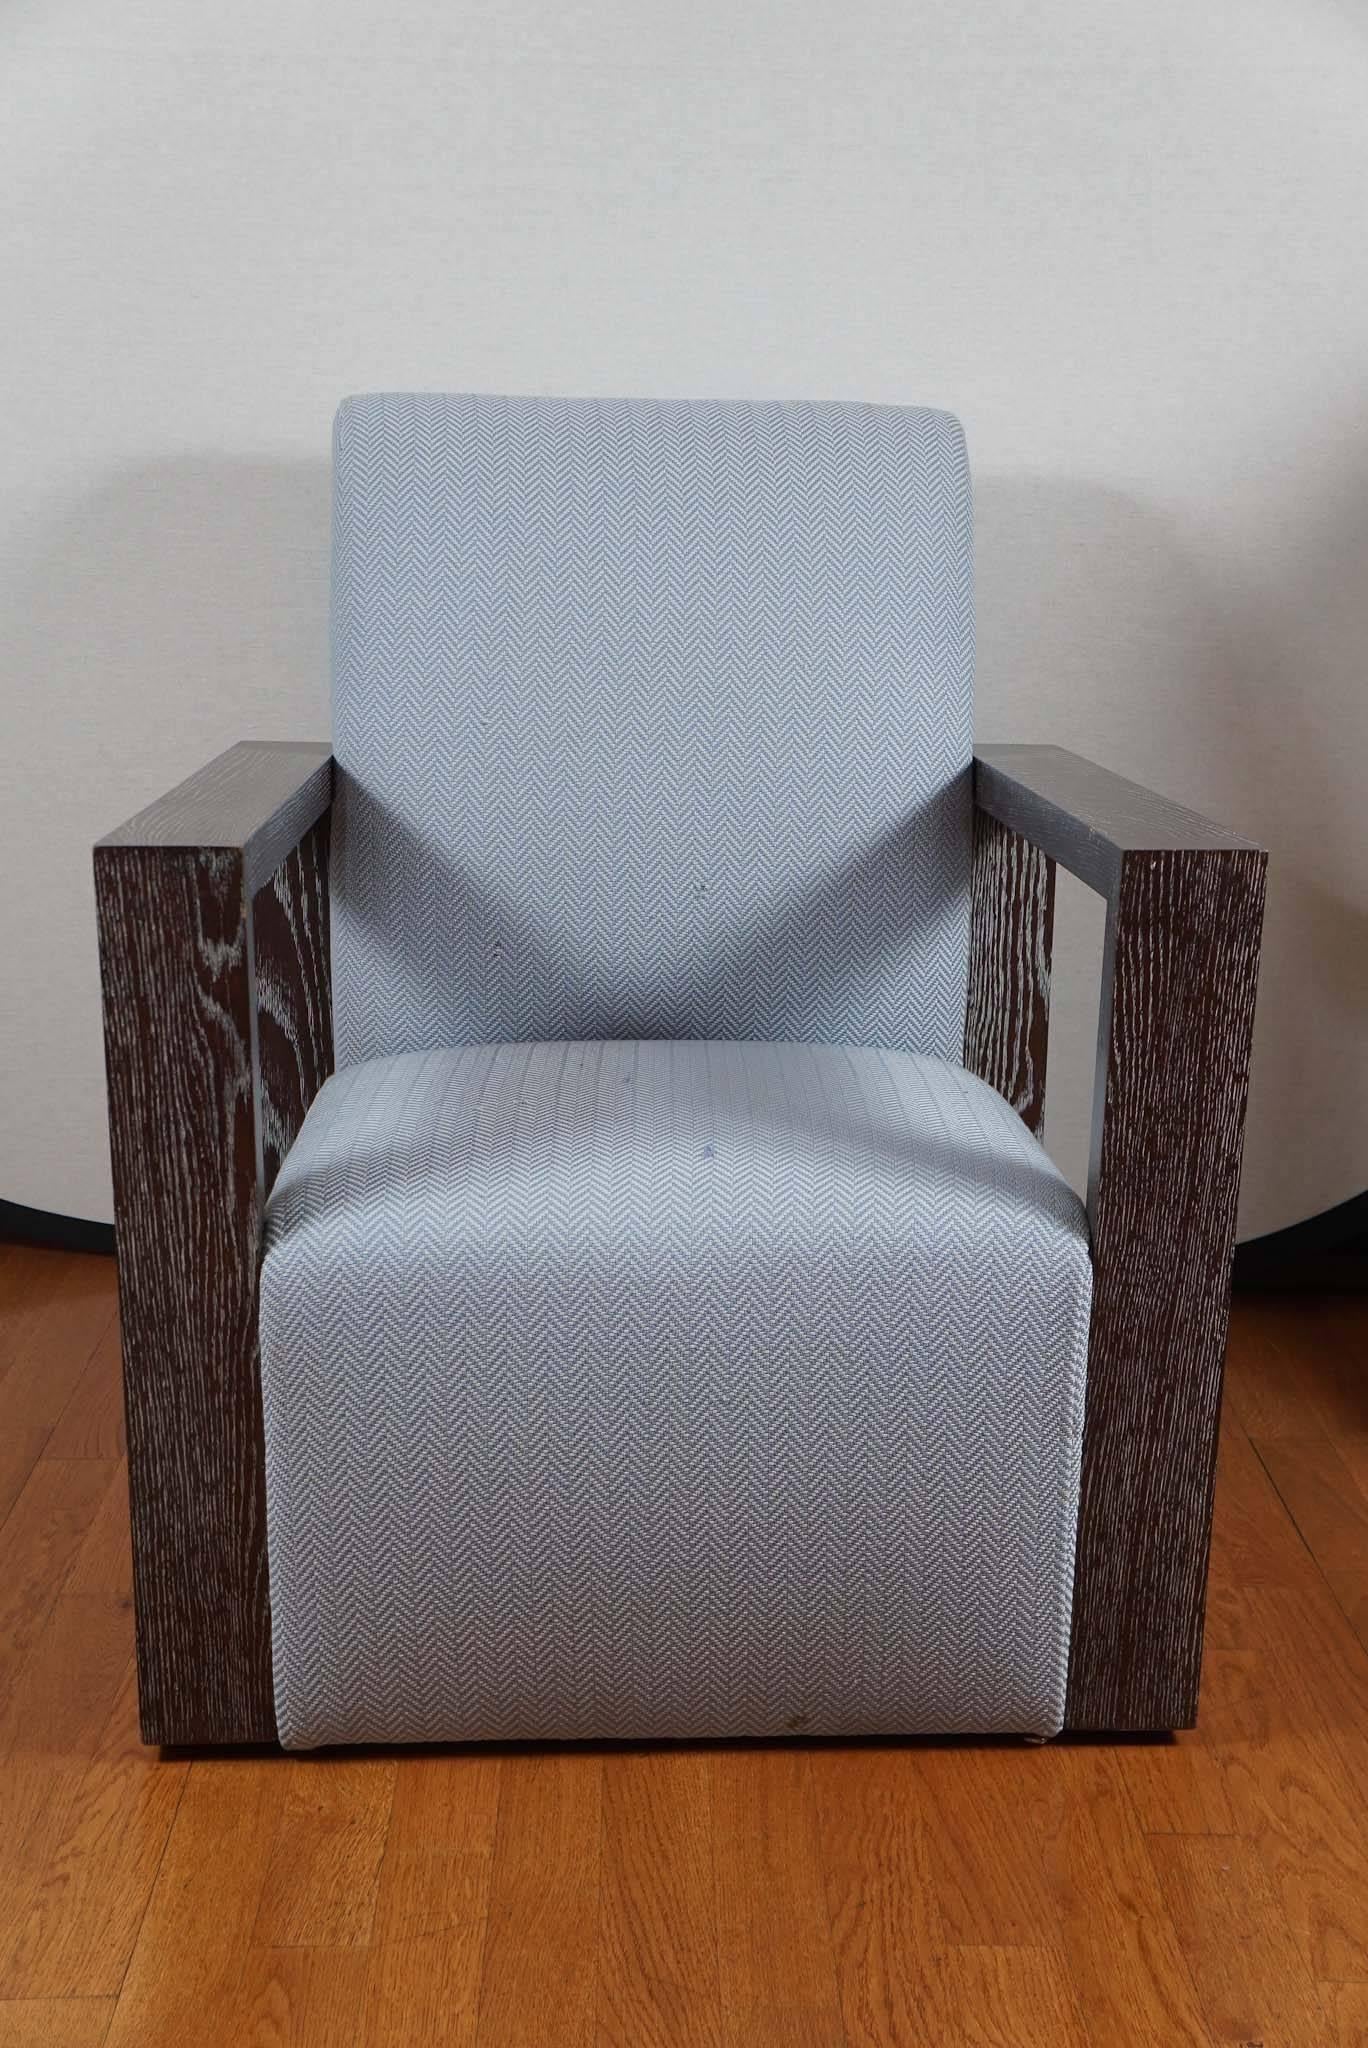 Art Deco style chair with open cerused oak arms.
Finish shown, in cafe latte cerused oak.

Custom finishes available: Cafe latte cerused oak, espresso mahogany, mocha walnut.
10-12 week lead time

COM: 3 yards based on 54